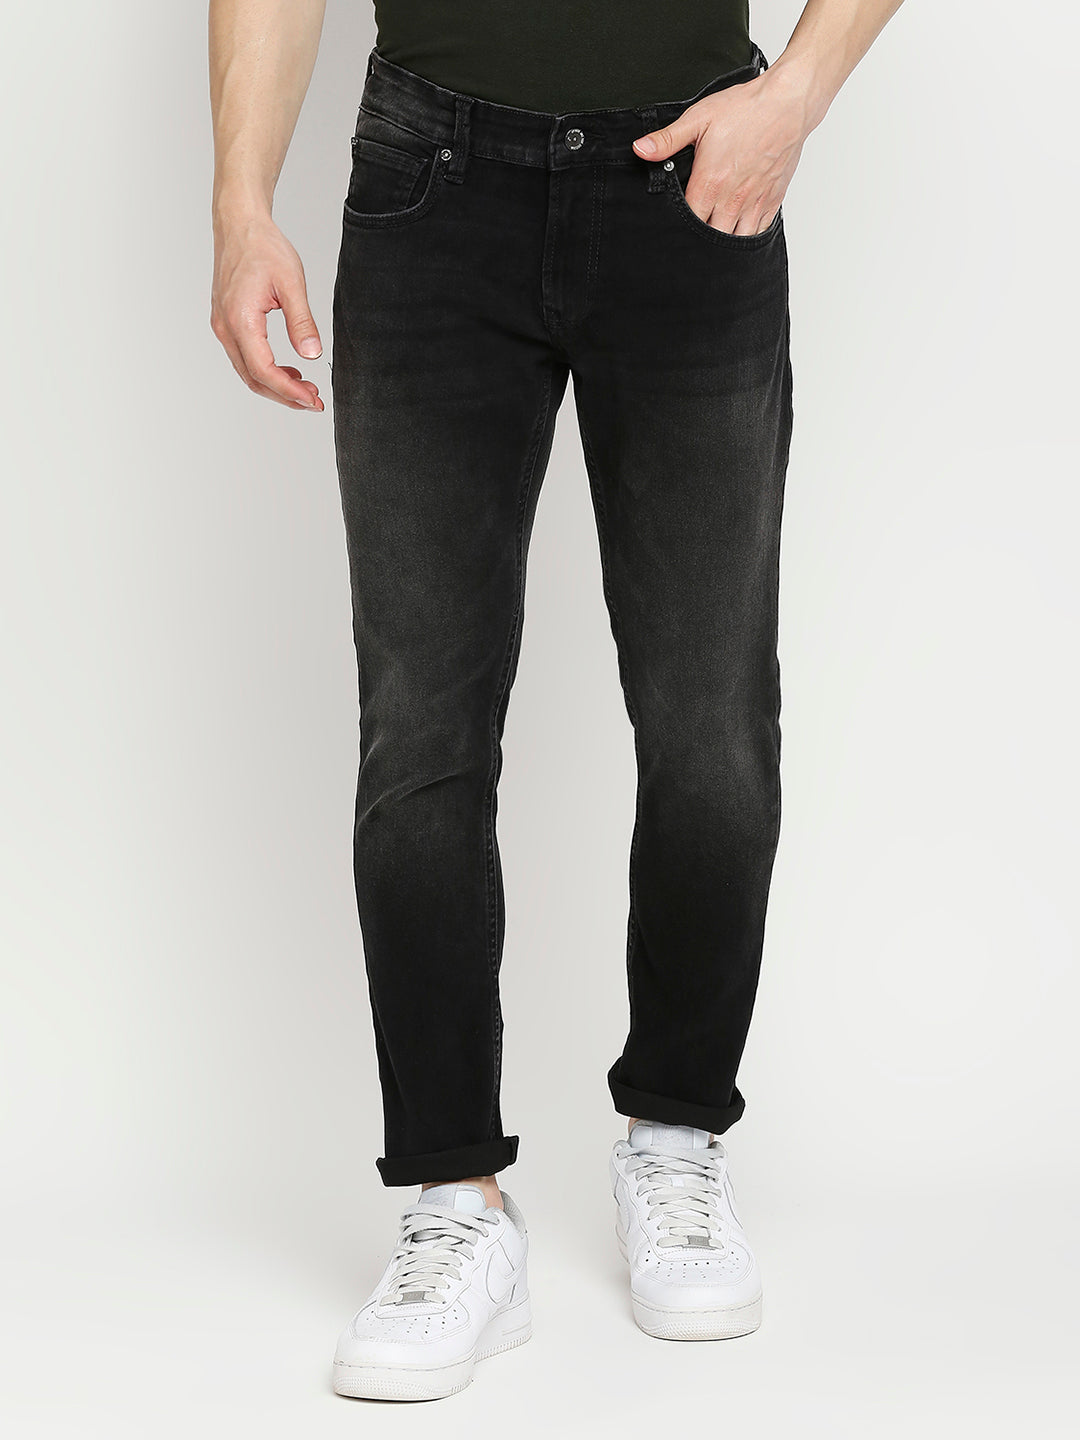 Spykar Charcoal Black Cotton Slim Fit Narrow Length Jeans For Men